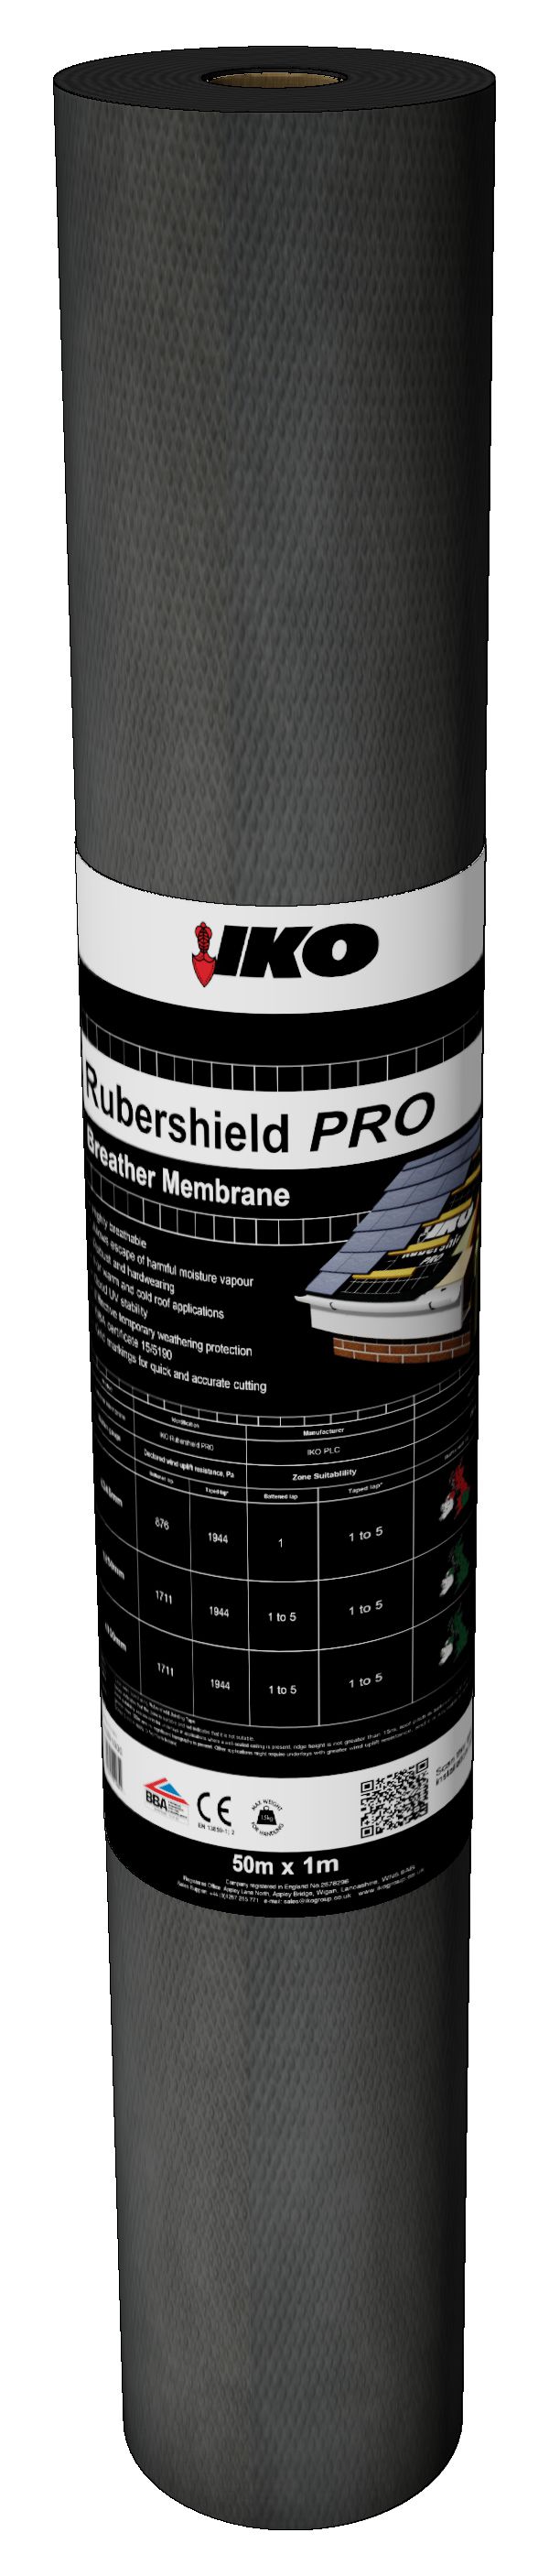 IKO Rubershield Pro 140g/sqm Breather Membrane - 50 x 1m